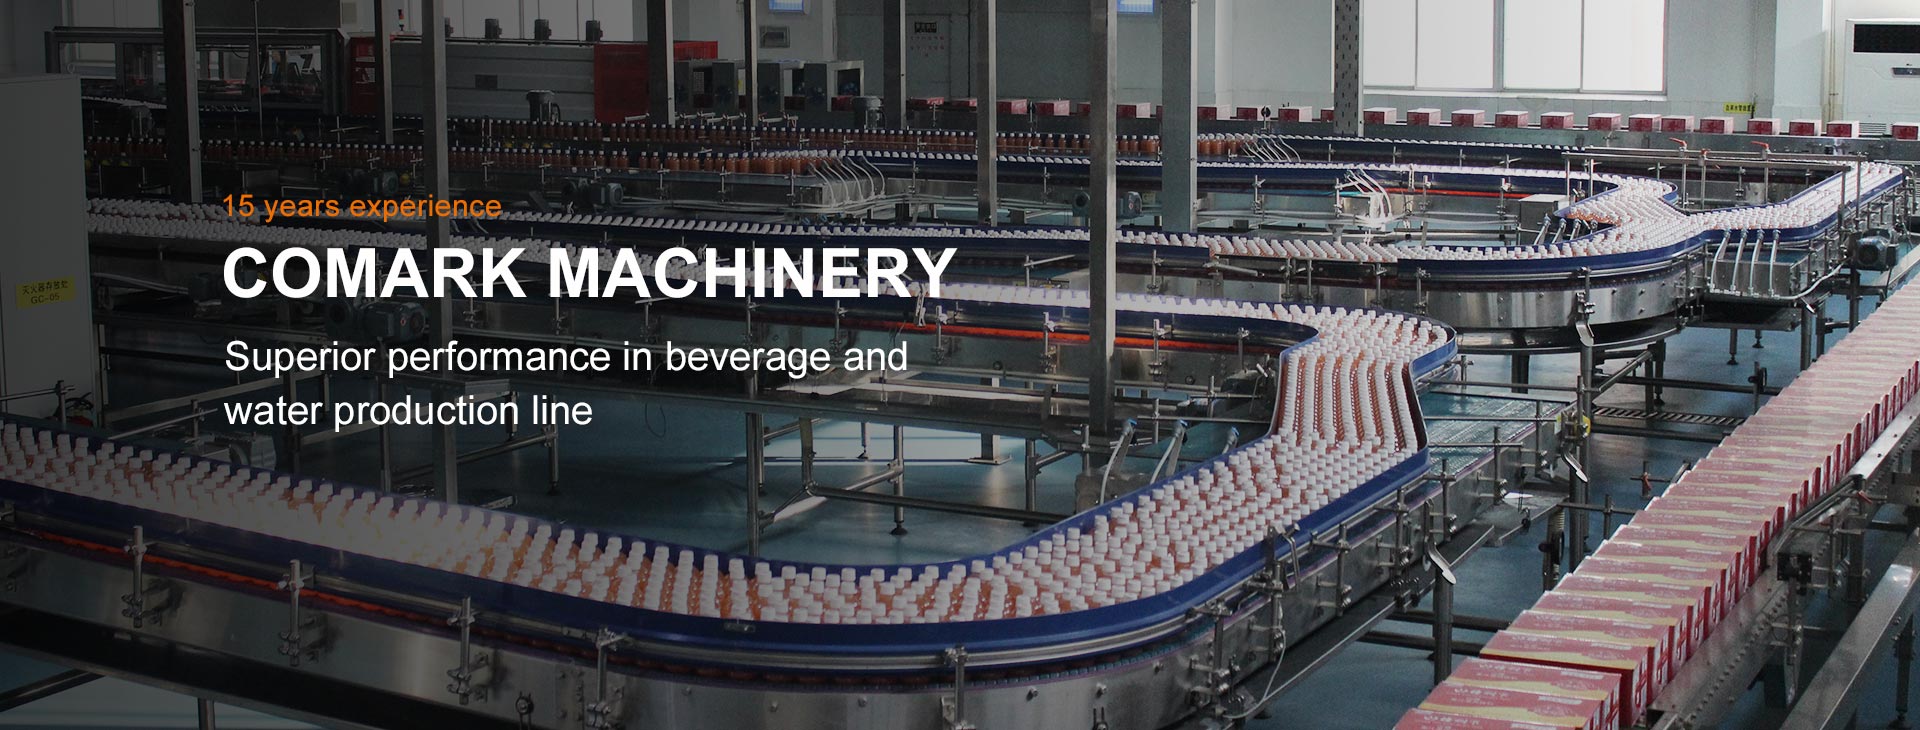 soda manufacturing equipment